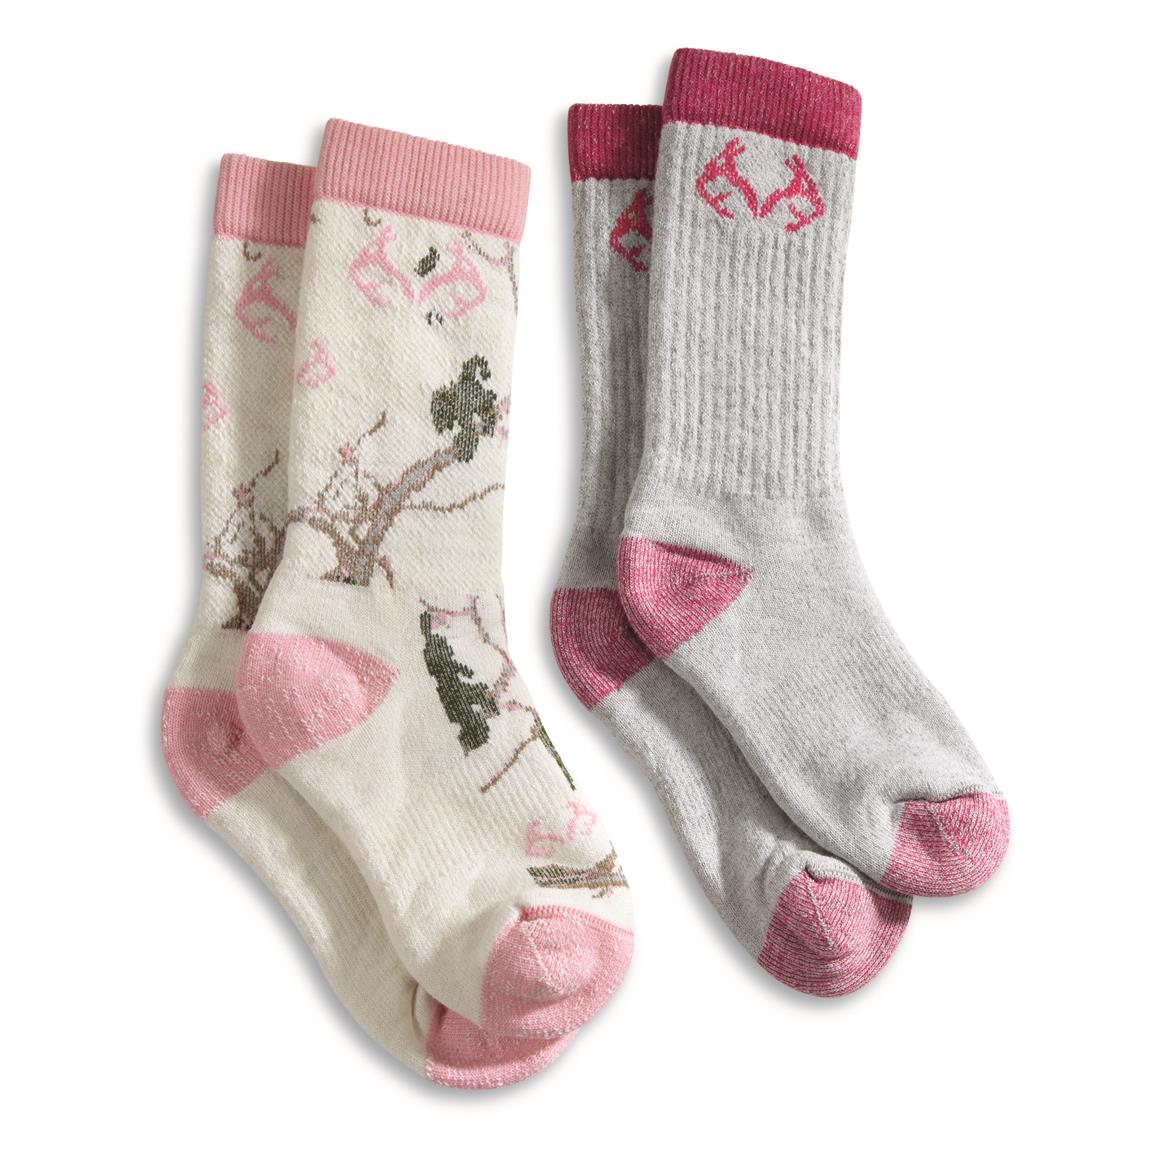 Kids' Realtree Wool Blend Boot Socks, 2 Pairs, Pink Camo/grey